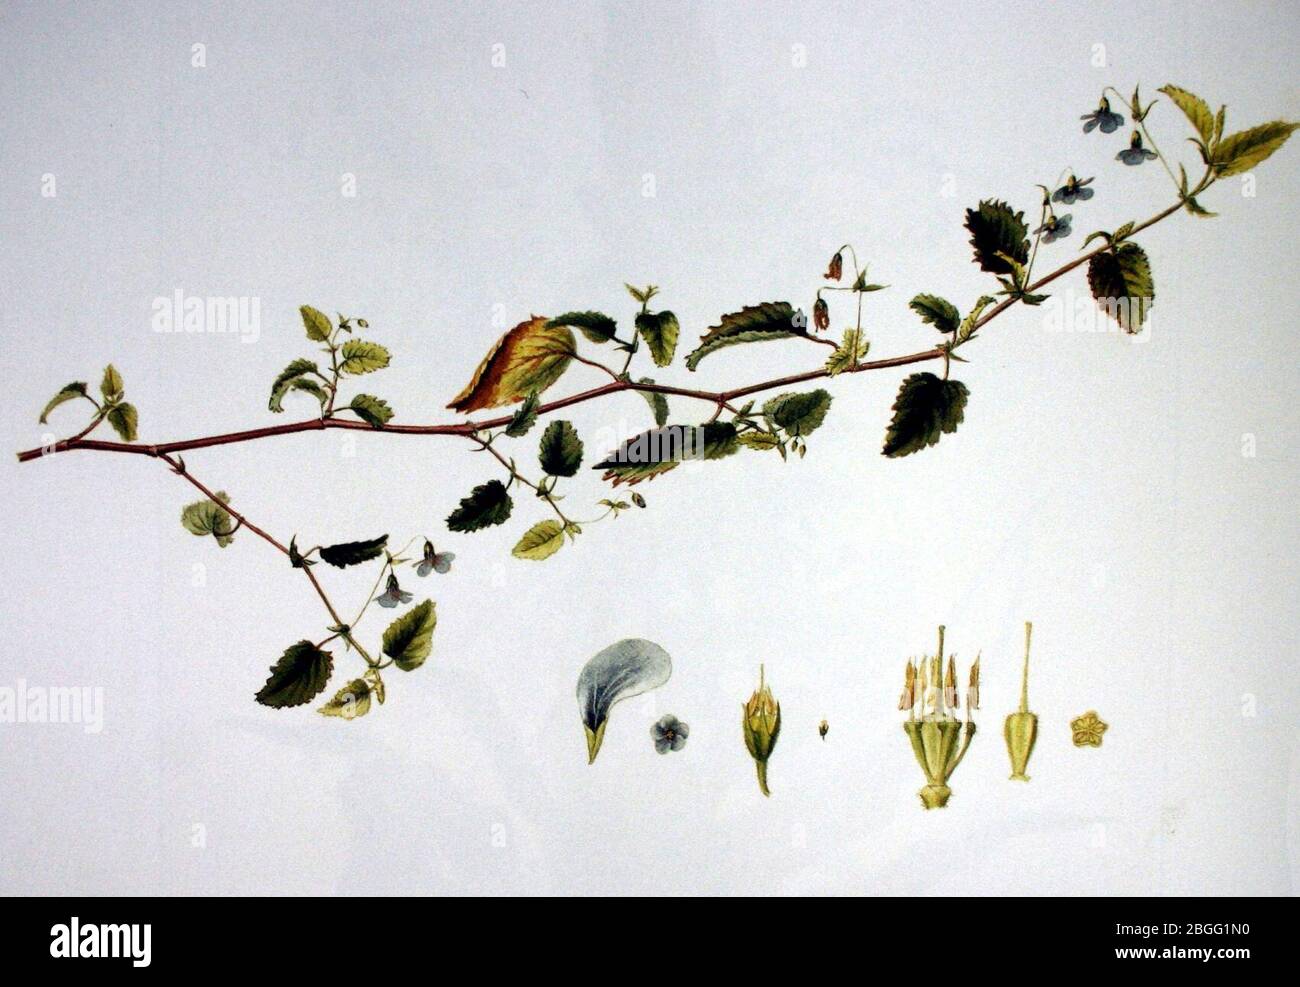 Hermannia violacea00. Stock Photo